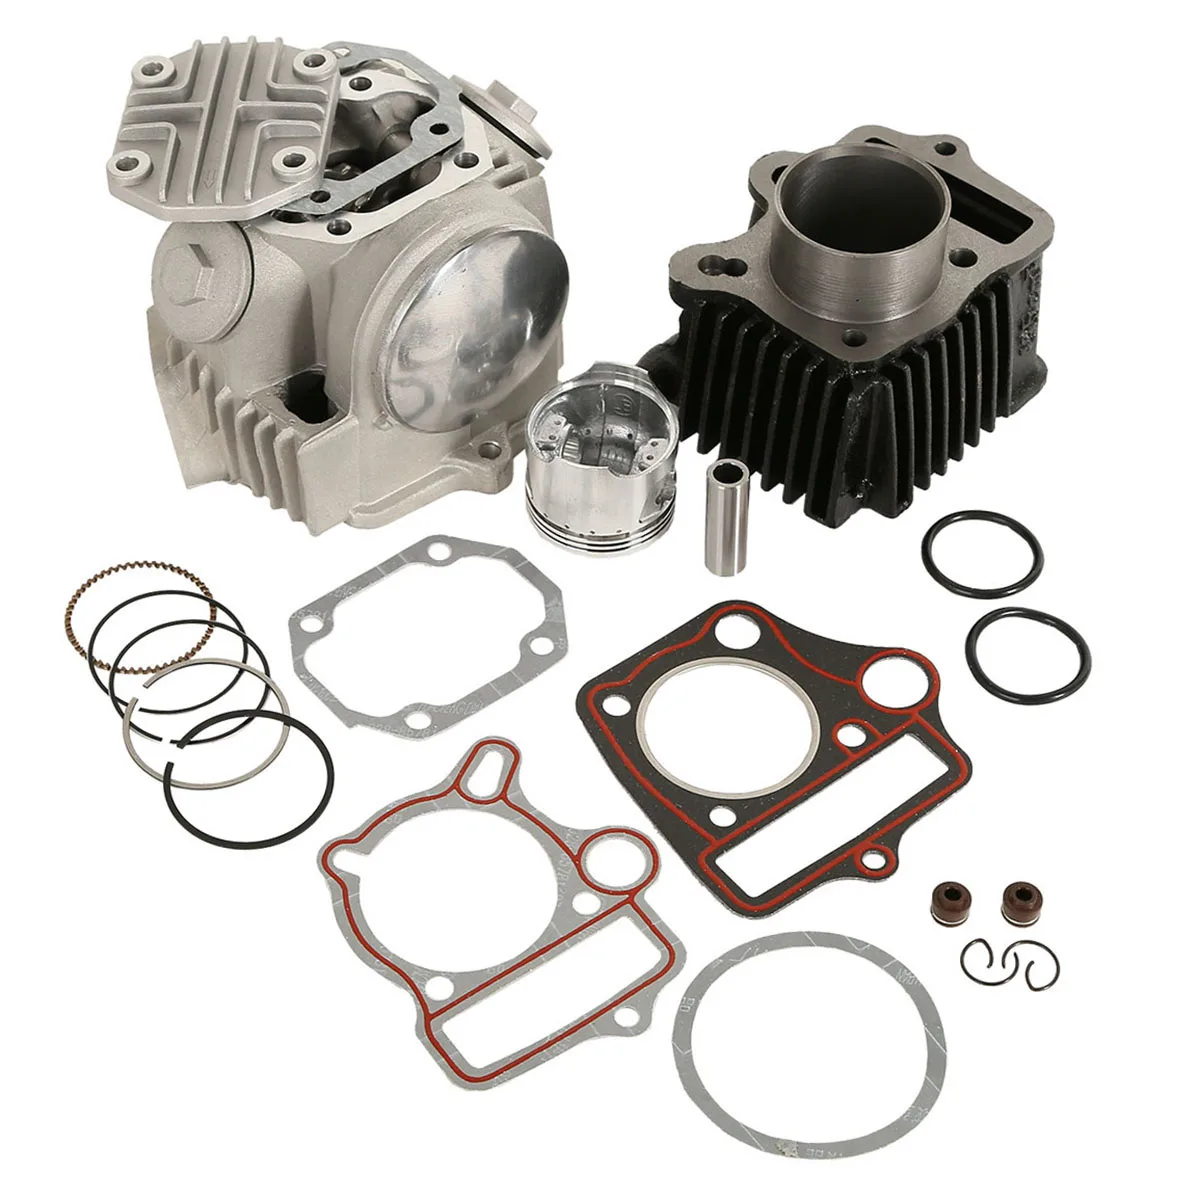 

Motorcycle 70CC Cylinder Rebuild Engine For Honda ATC70 CRF70 CT70 C70 TRX70 S65 XR70R 1997-2003 XL70 1974-1976 SL70 1971-1973